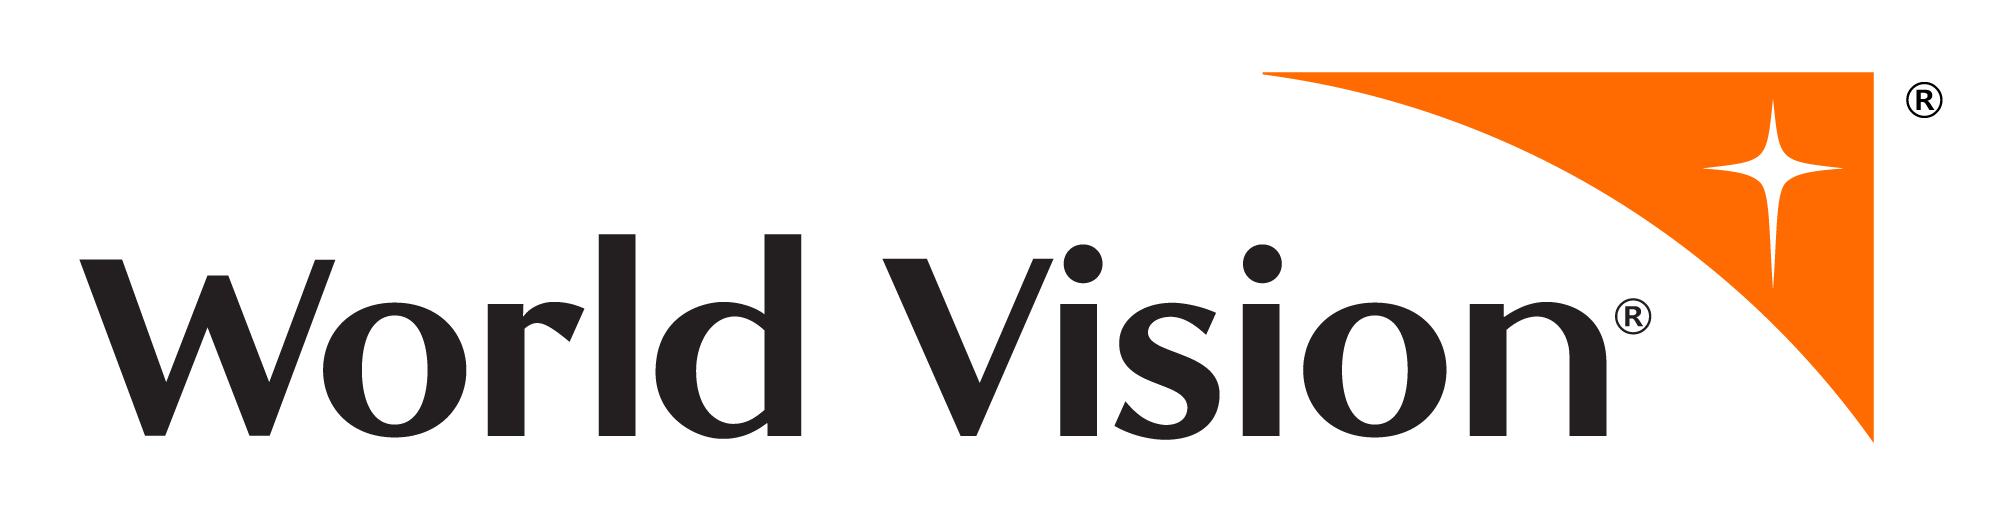 World Vision Canada